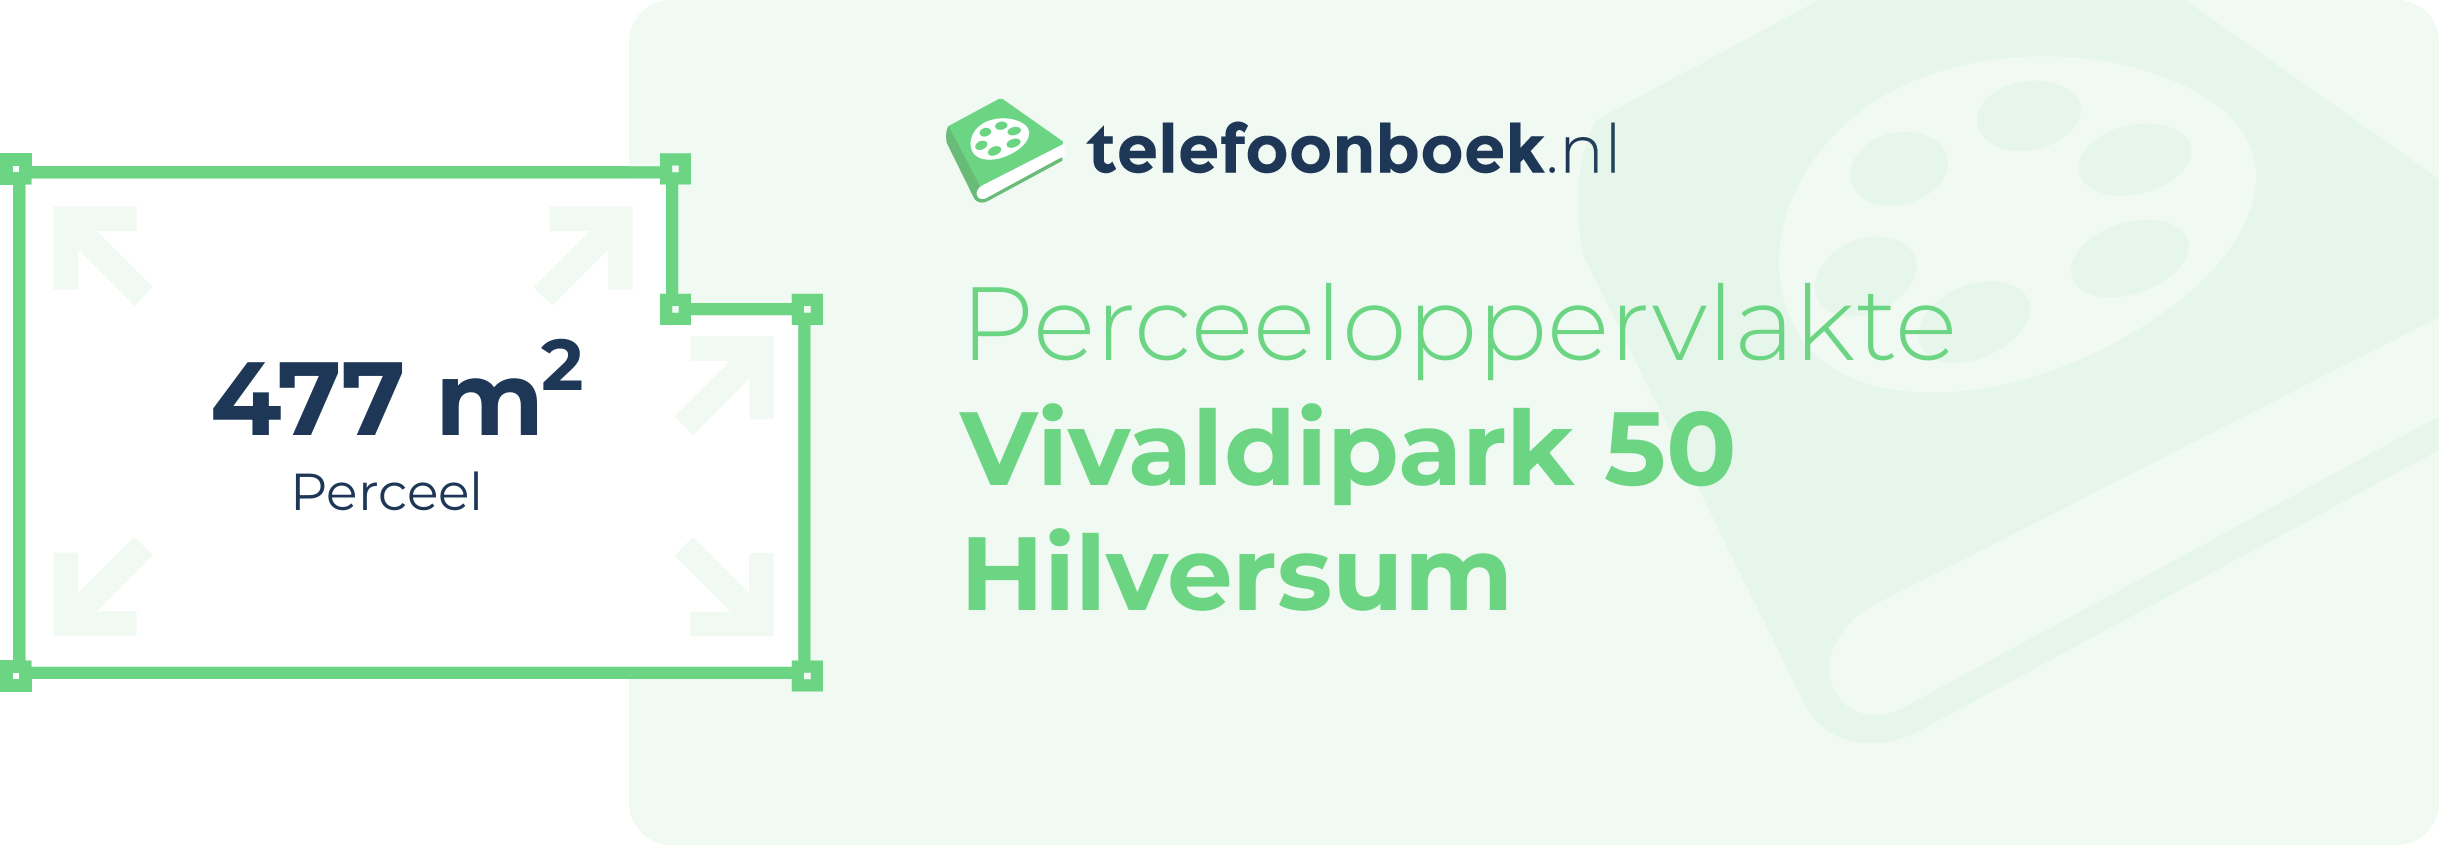 Perceeloppervlakte Vivaldipark 50 Hilversum